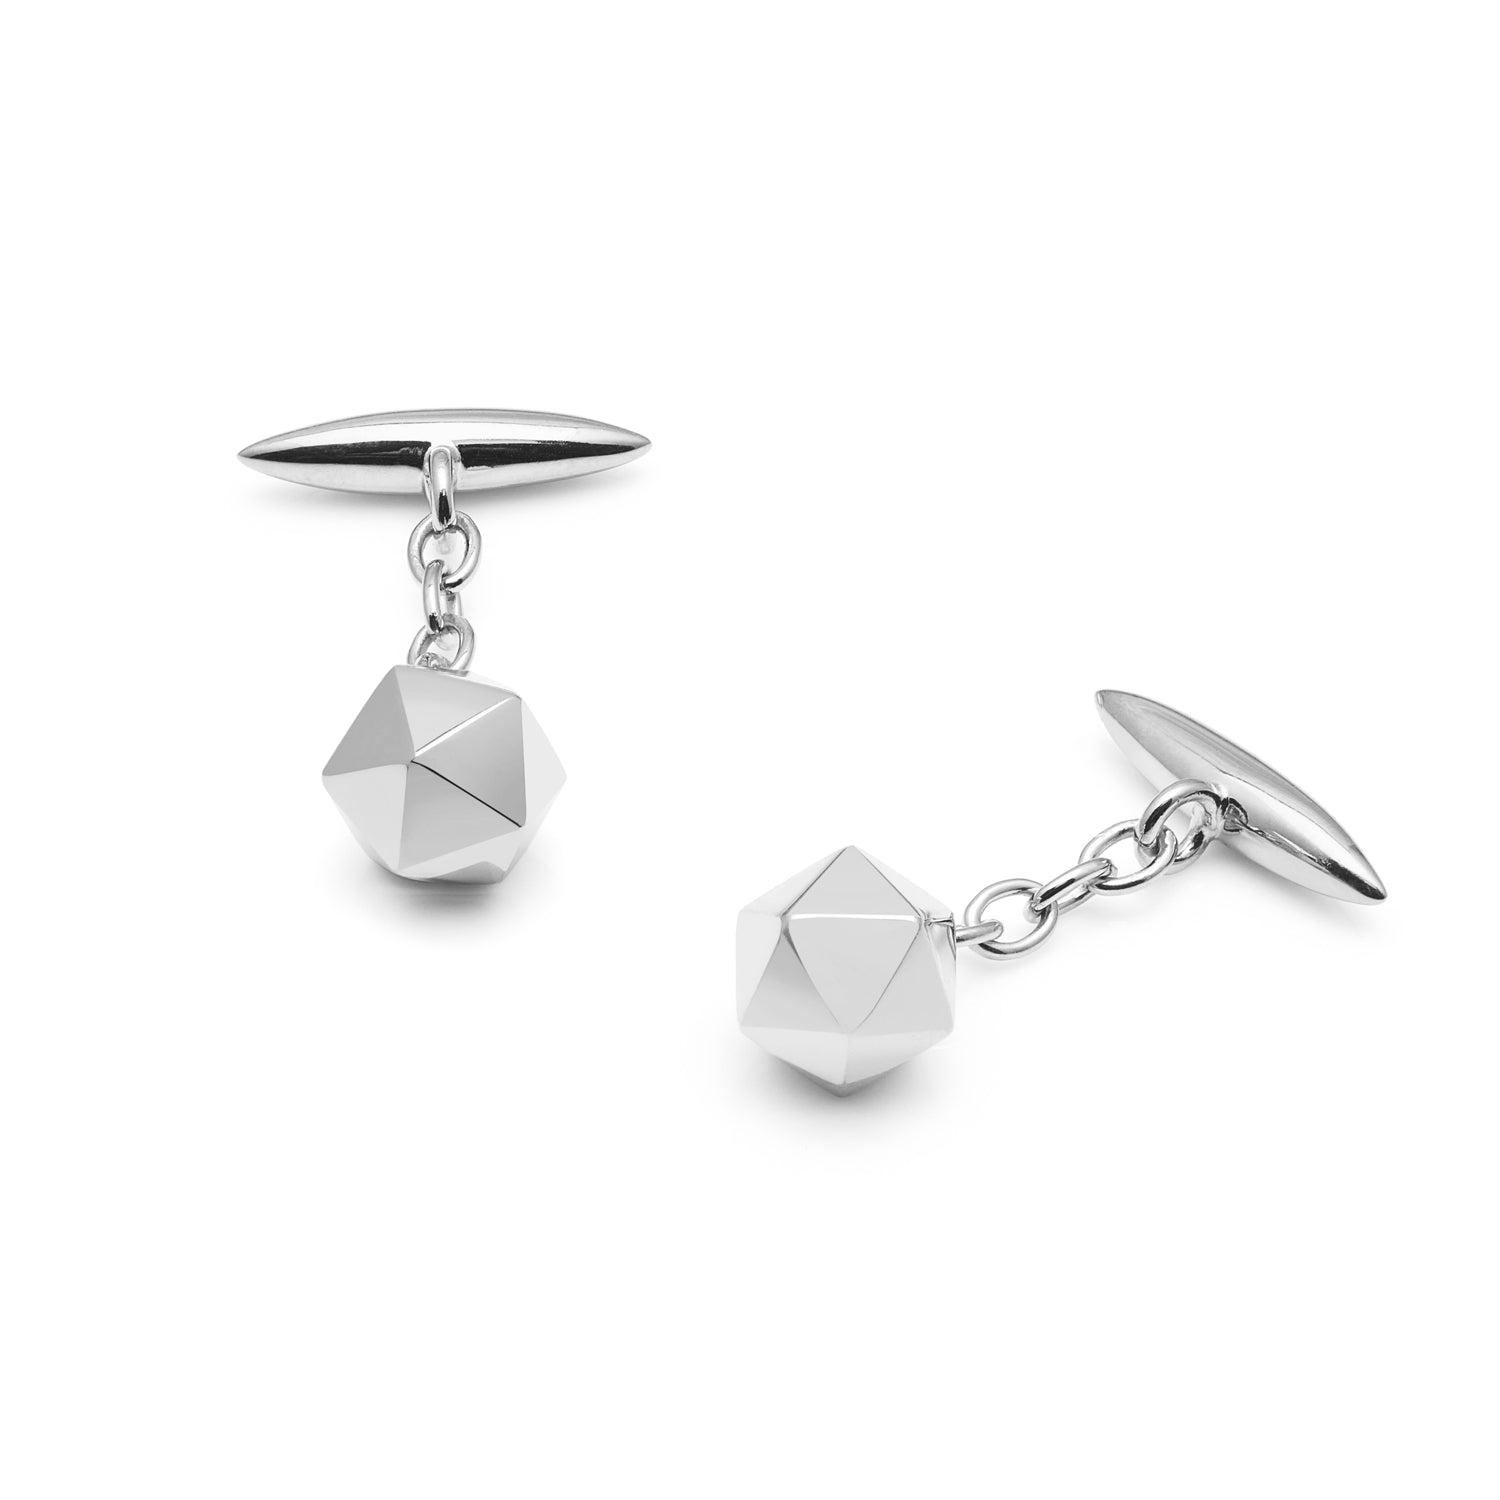 Icosahedron Cufflinks - Silver